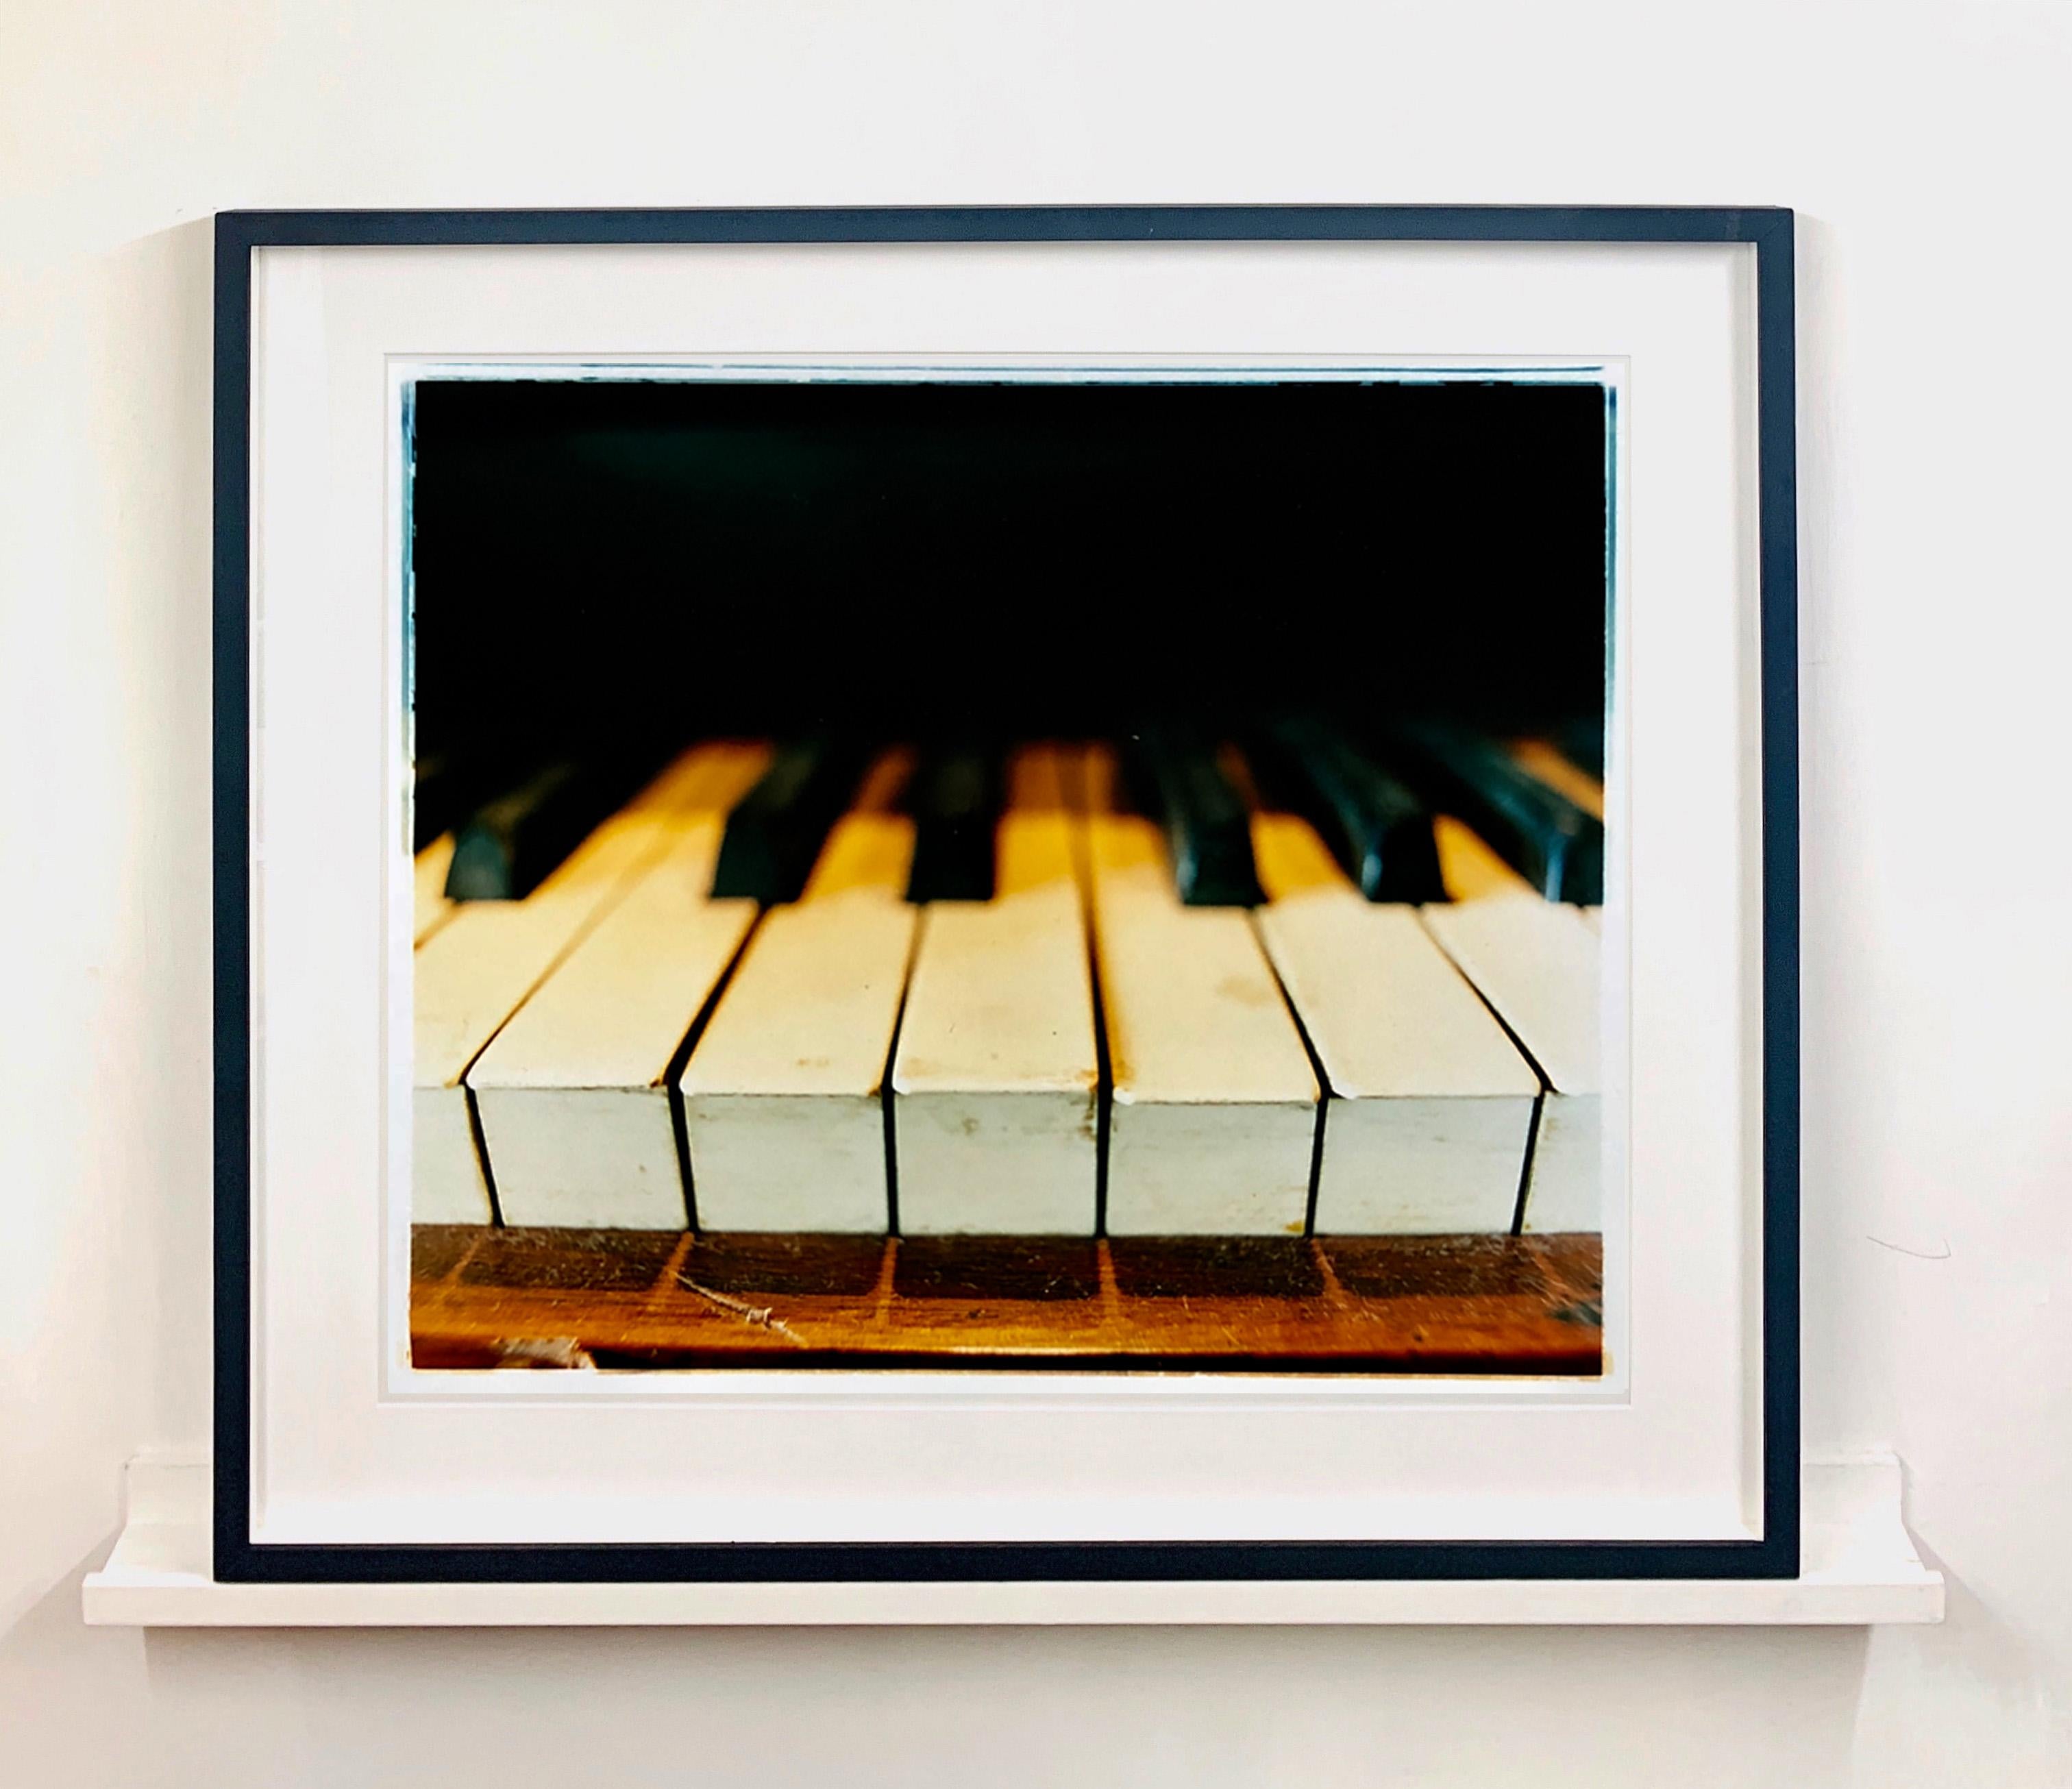 Klavierschlüssel, Stockton-on-Tees - Musikfarbenfotografie – Print von Richard Heeps